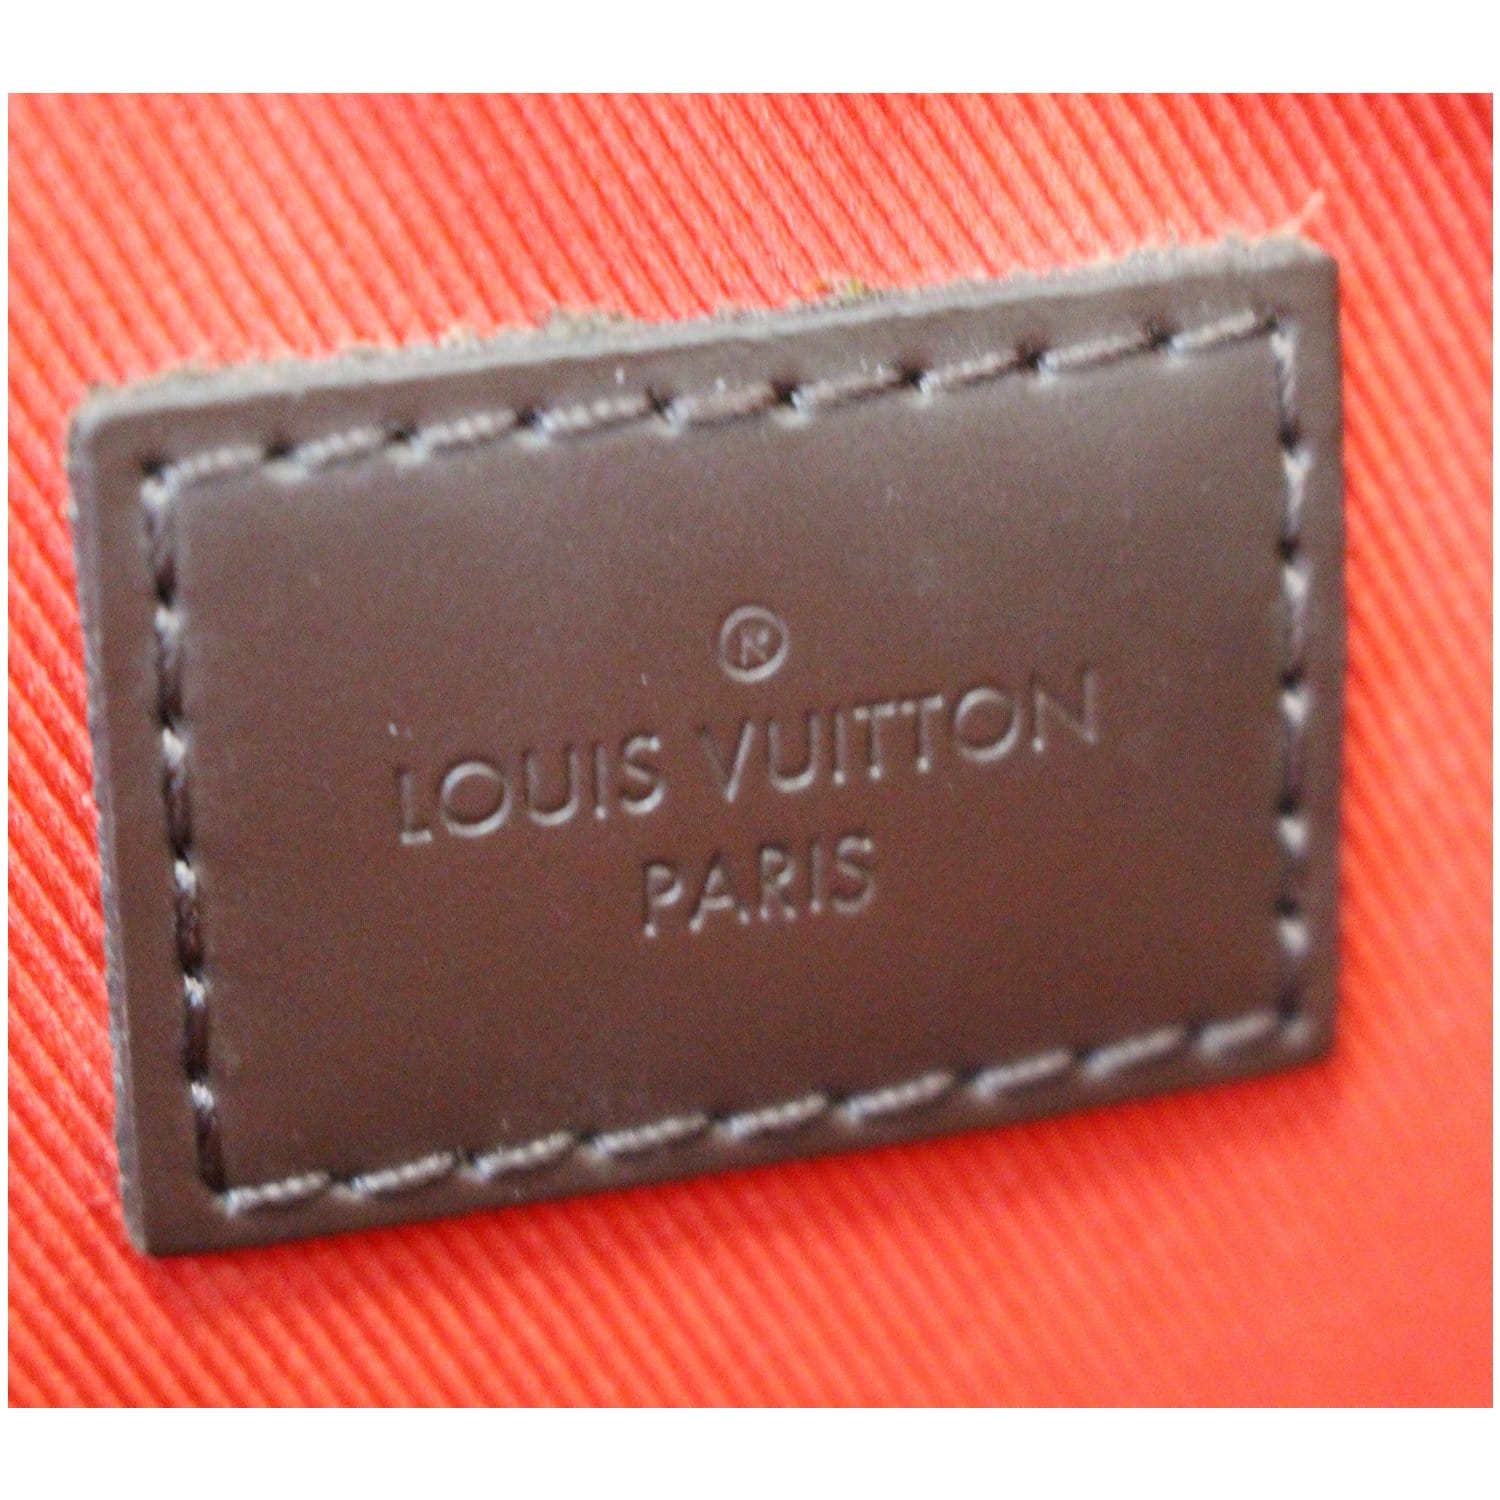 Louis Vuitton South Bank Besace overview #lvcrossbody #delv  #louisvuittonbag 